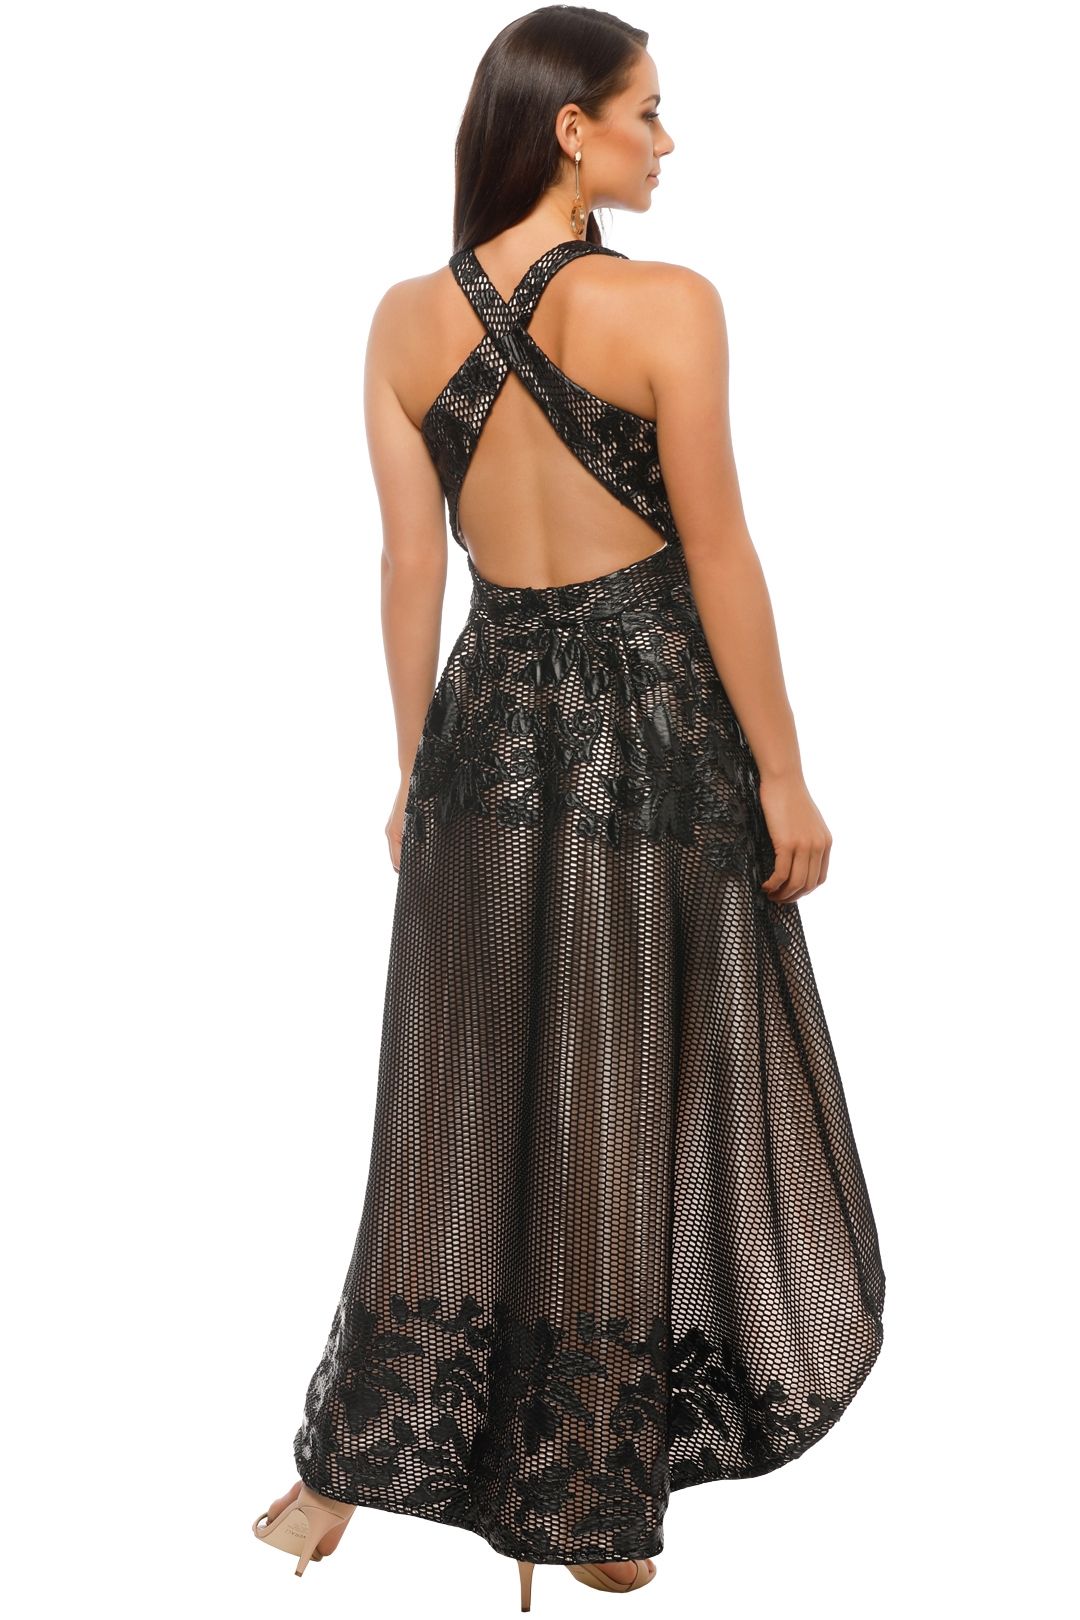 Tinaholy - Floral Lace Dress - Black - Back